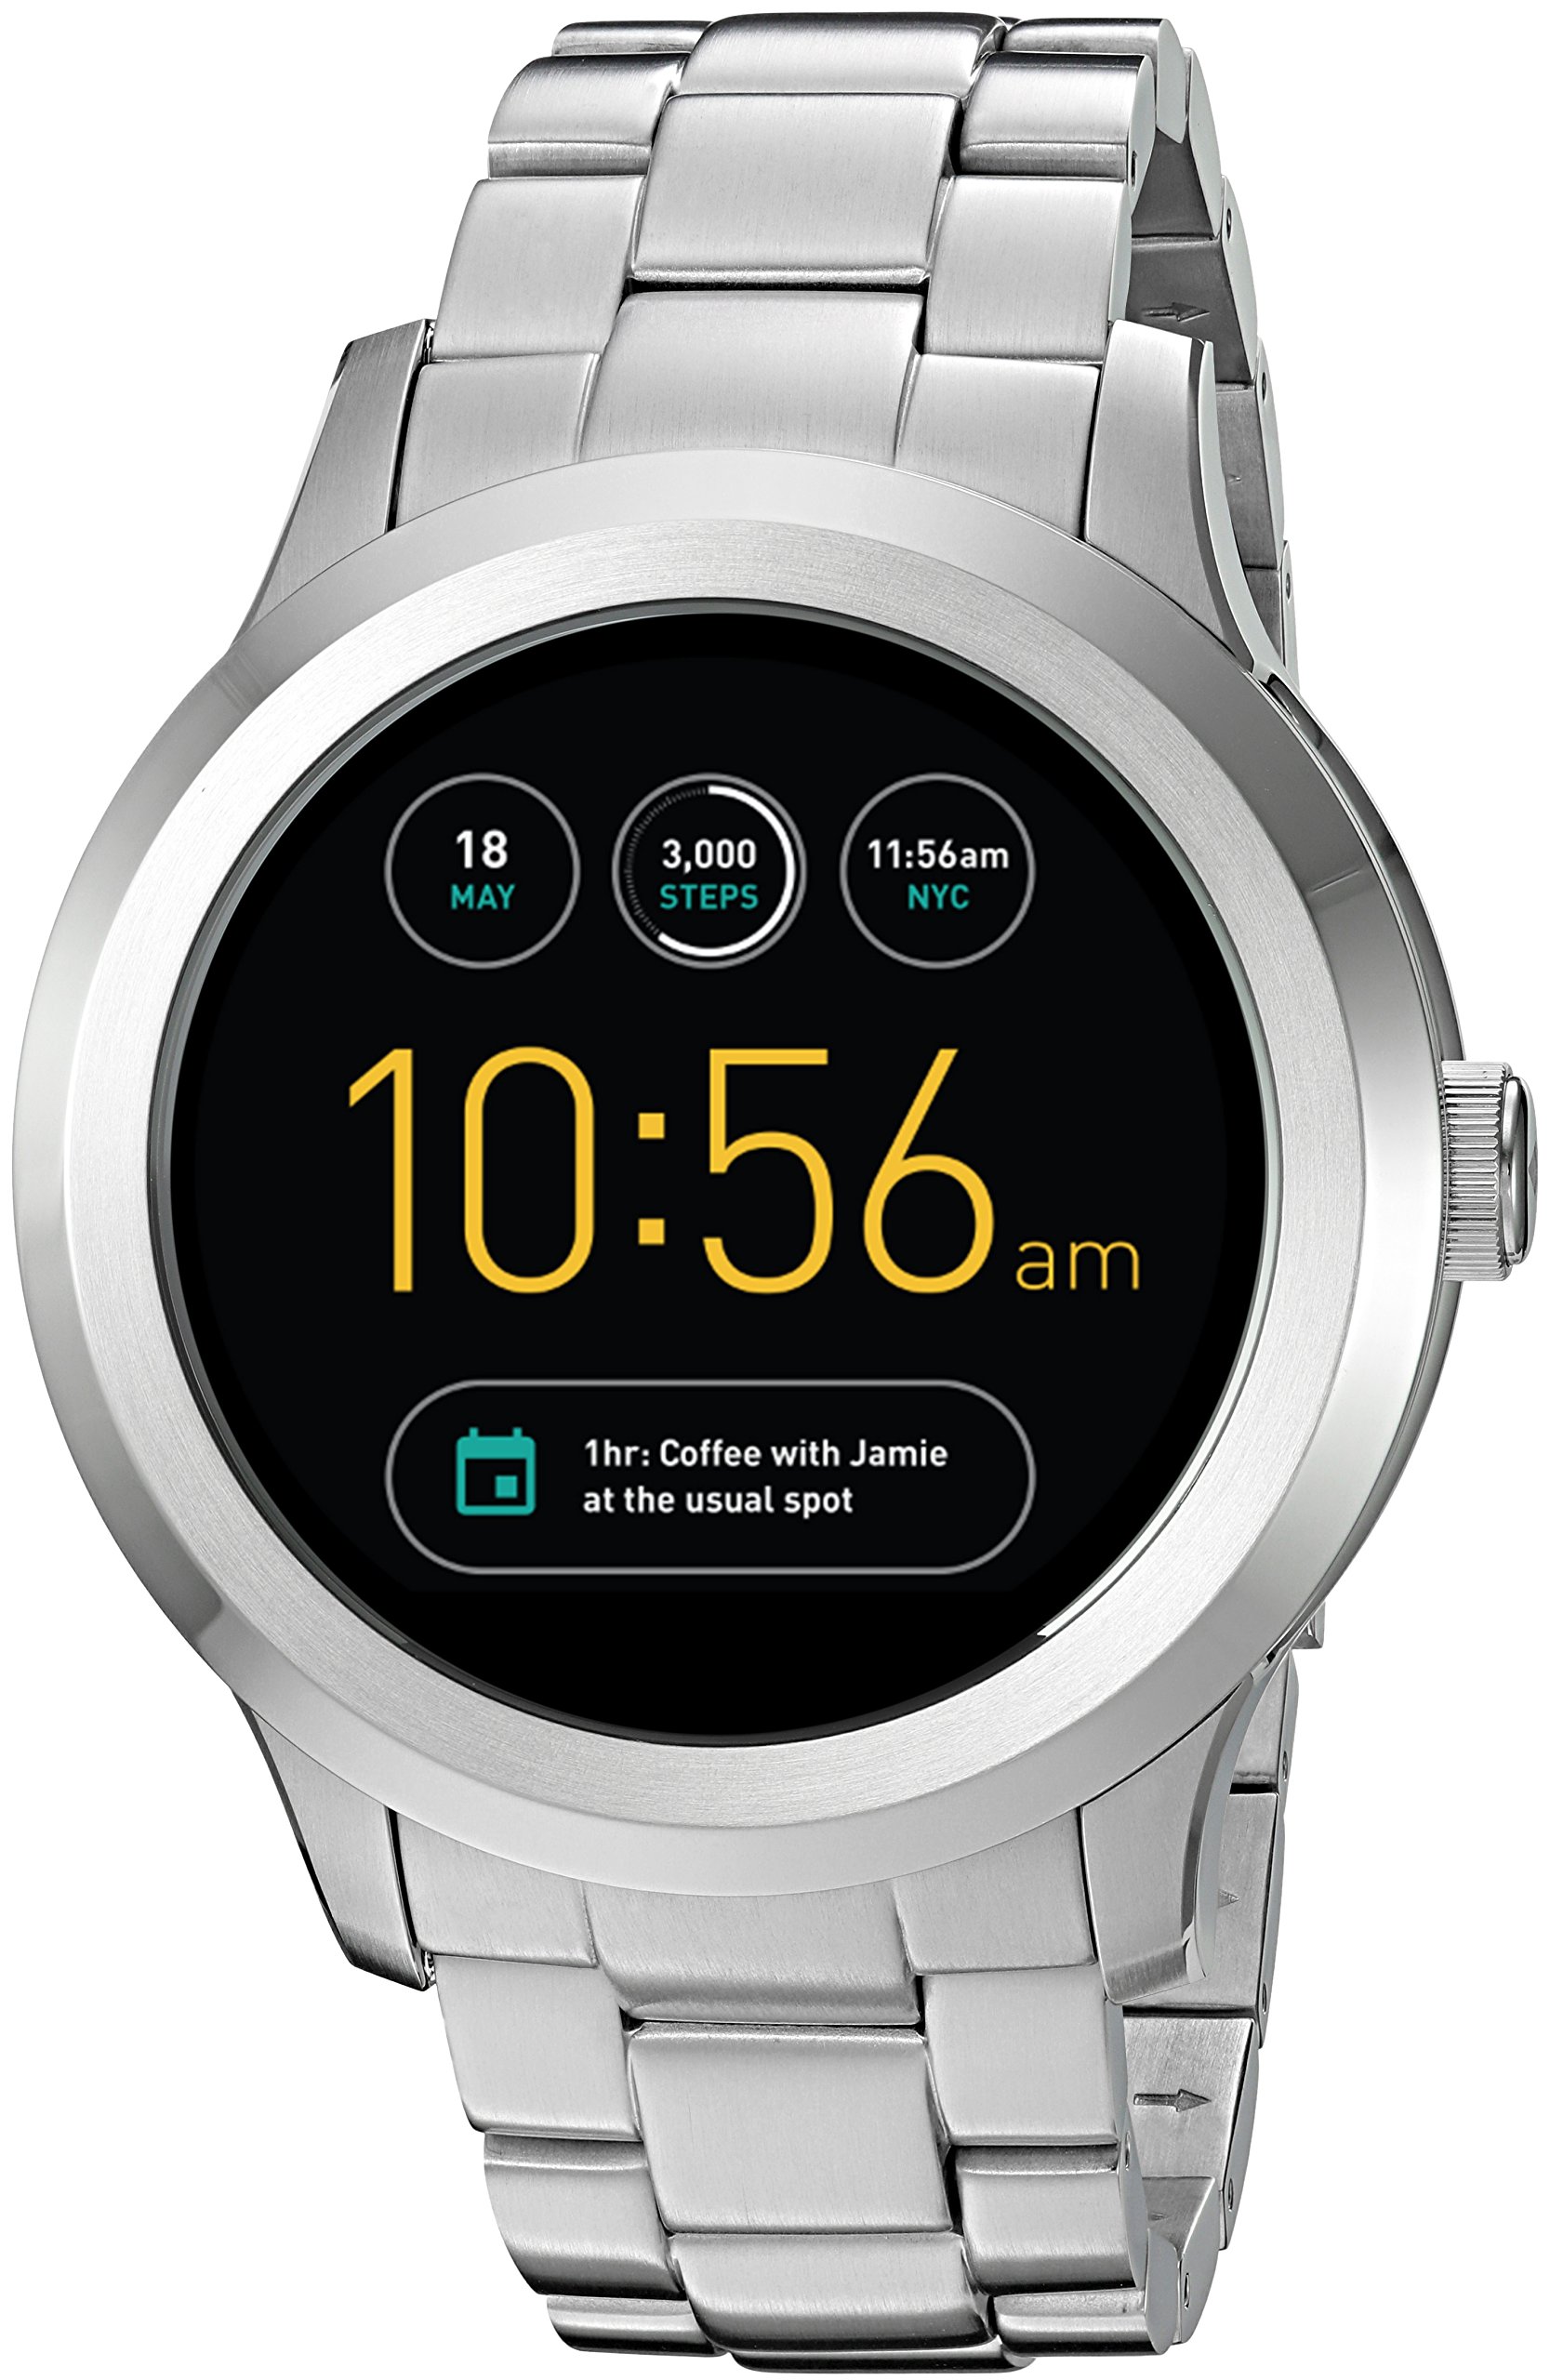 Đồng hồ Fossil Q Founder Gen 2 Stainless Steel Touchscreen Smartwatch FTW2116